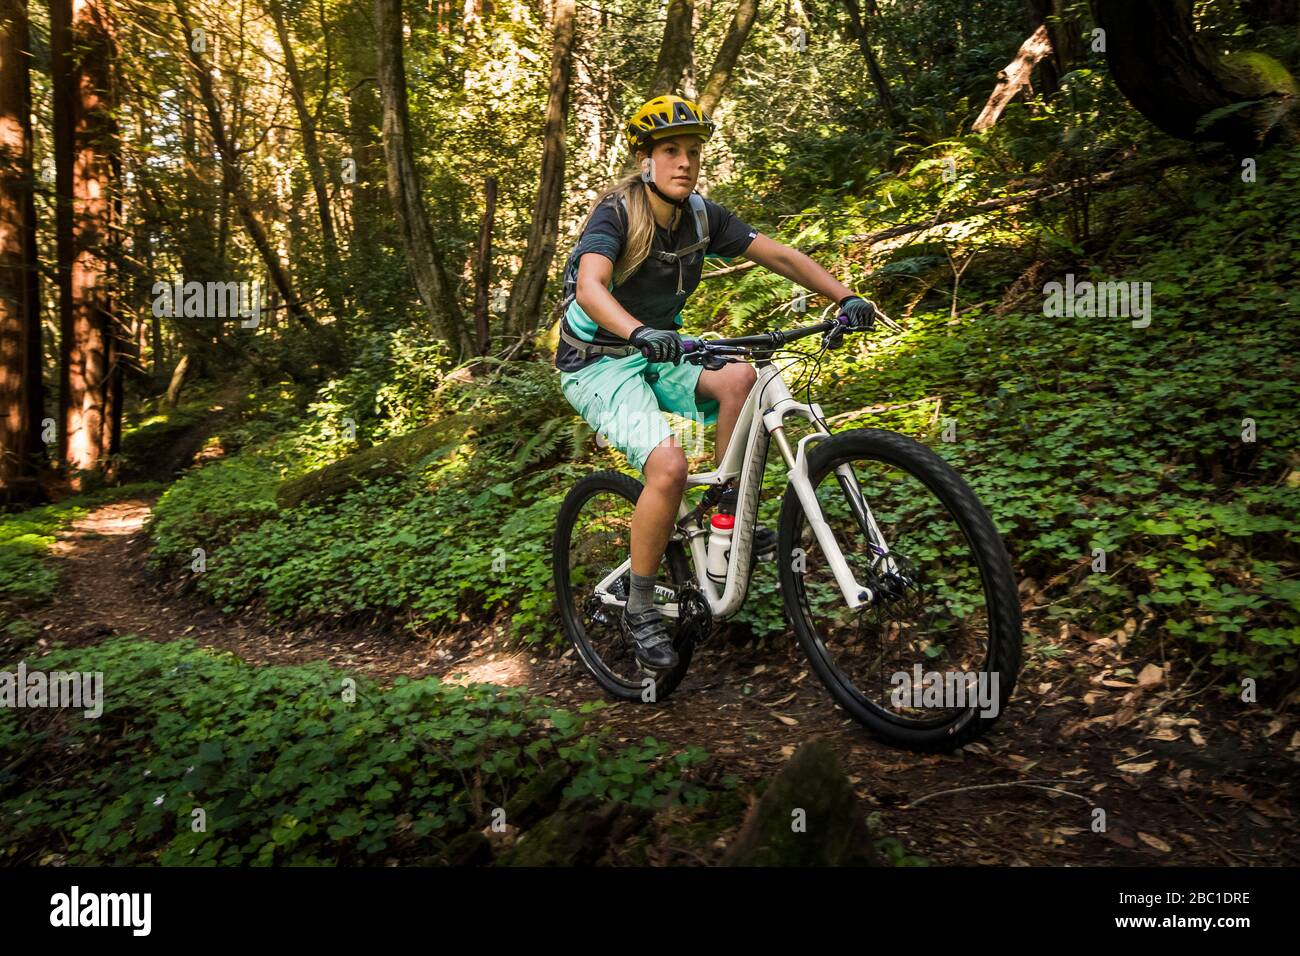 Woman riding mountainbike on forest track, Santa Cruz, California, USA Stock Photo